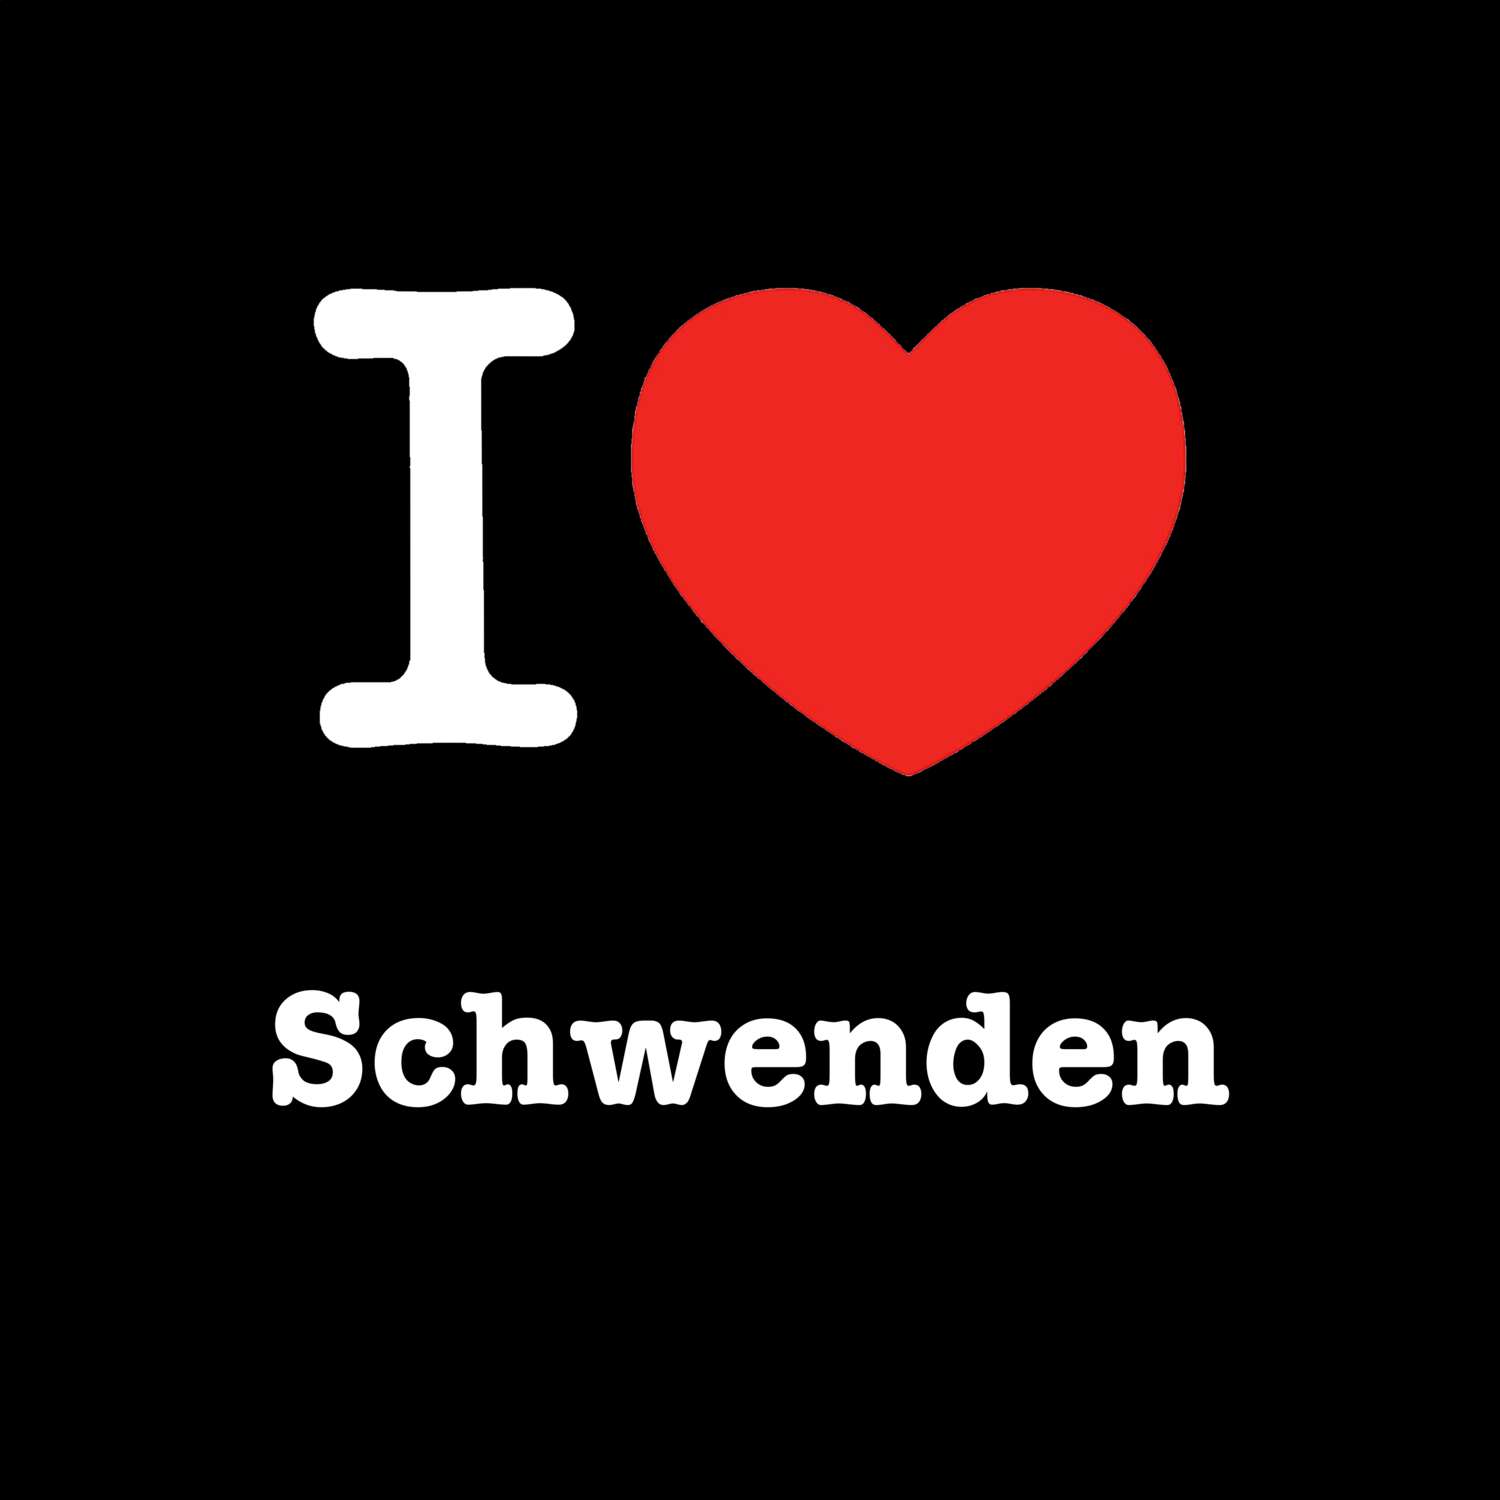 Schwenden T-Shirt »I love«